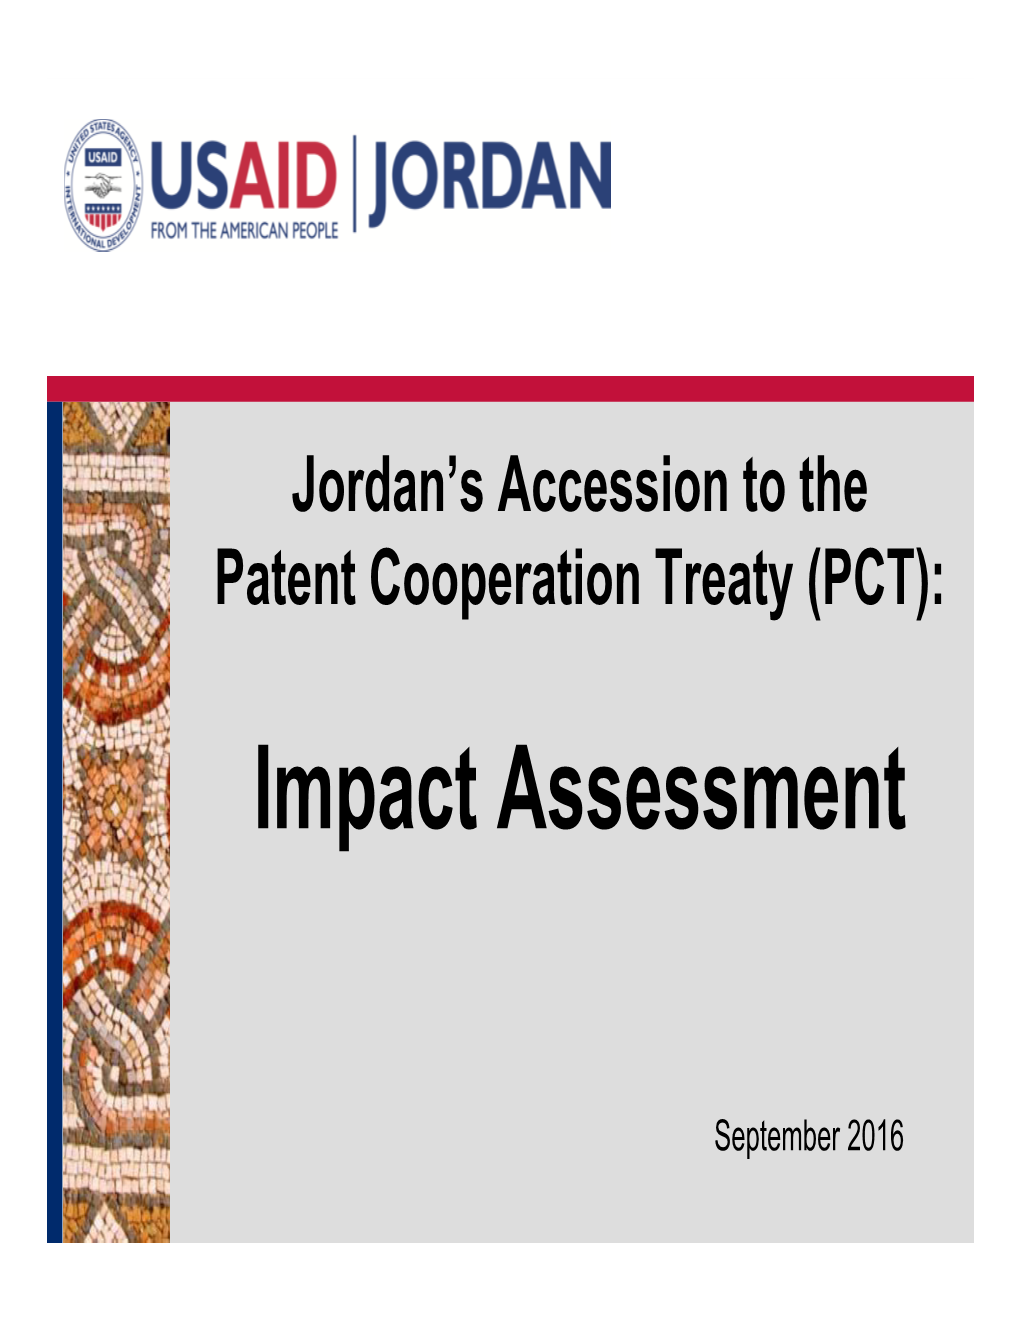 (PCT): Impact Assessment